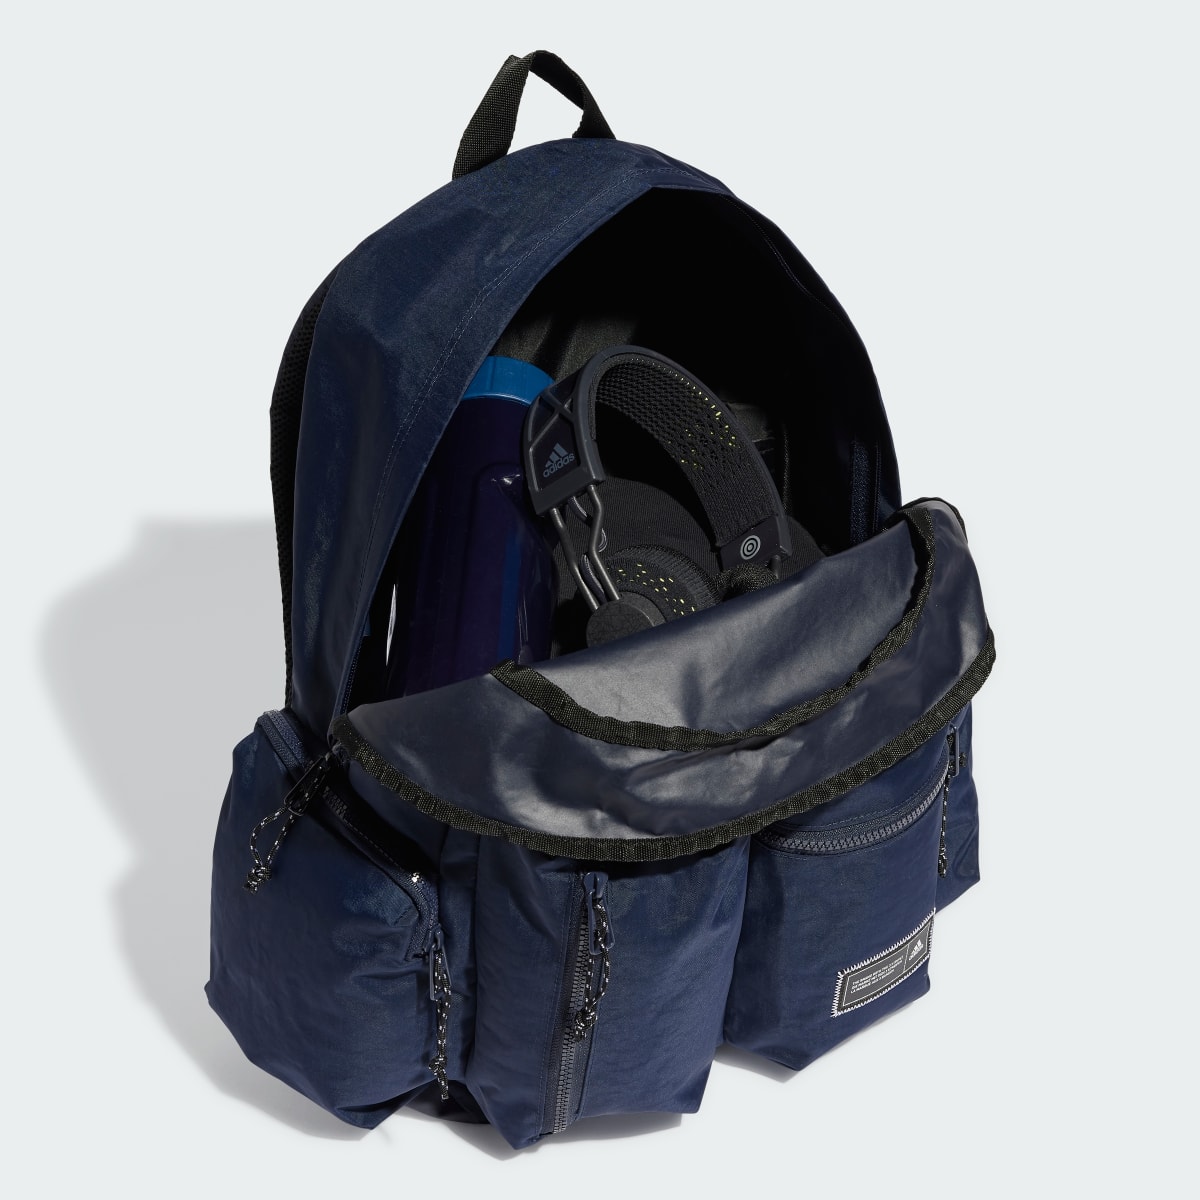 Adidas Back To University Classic Backpack. 5